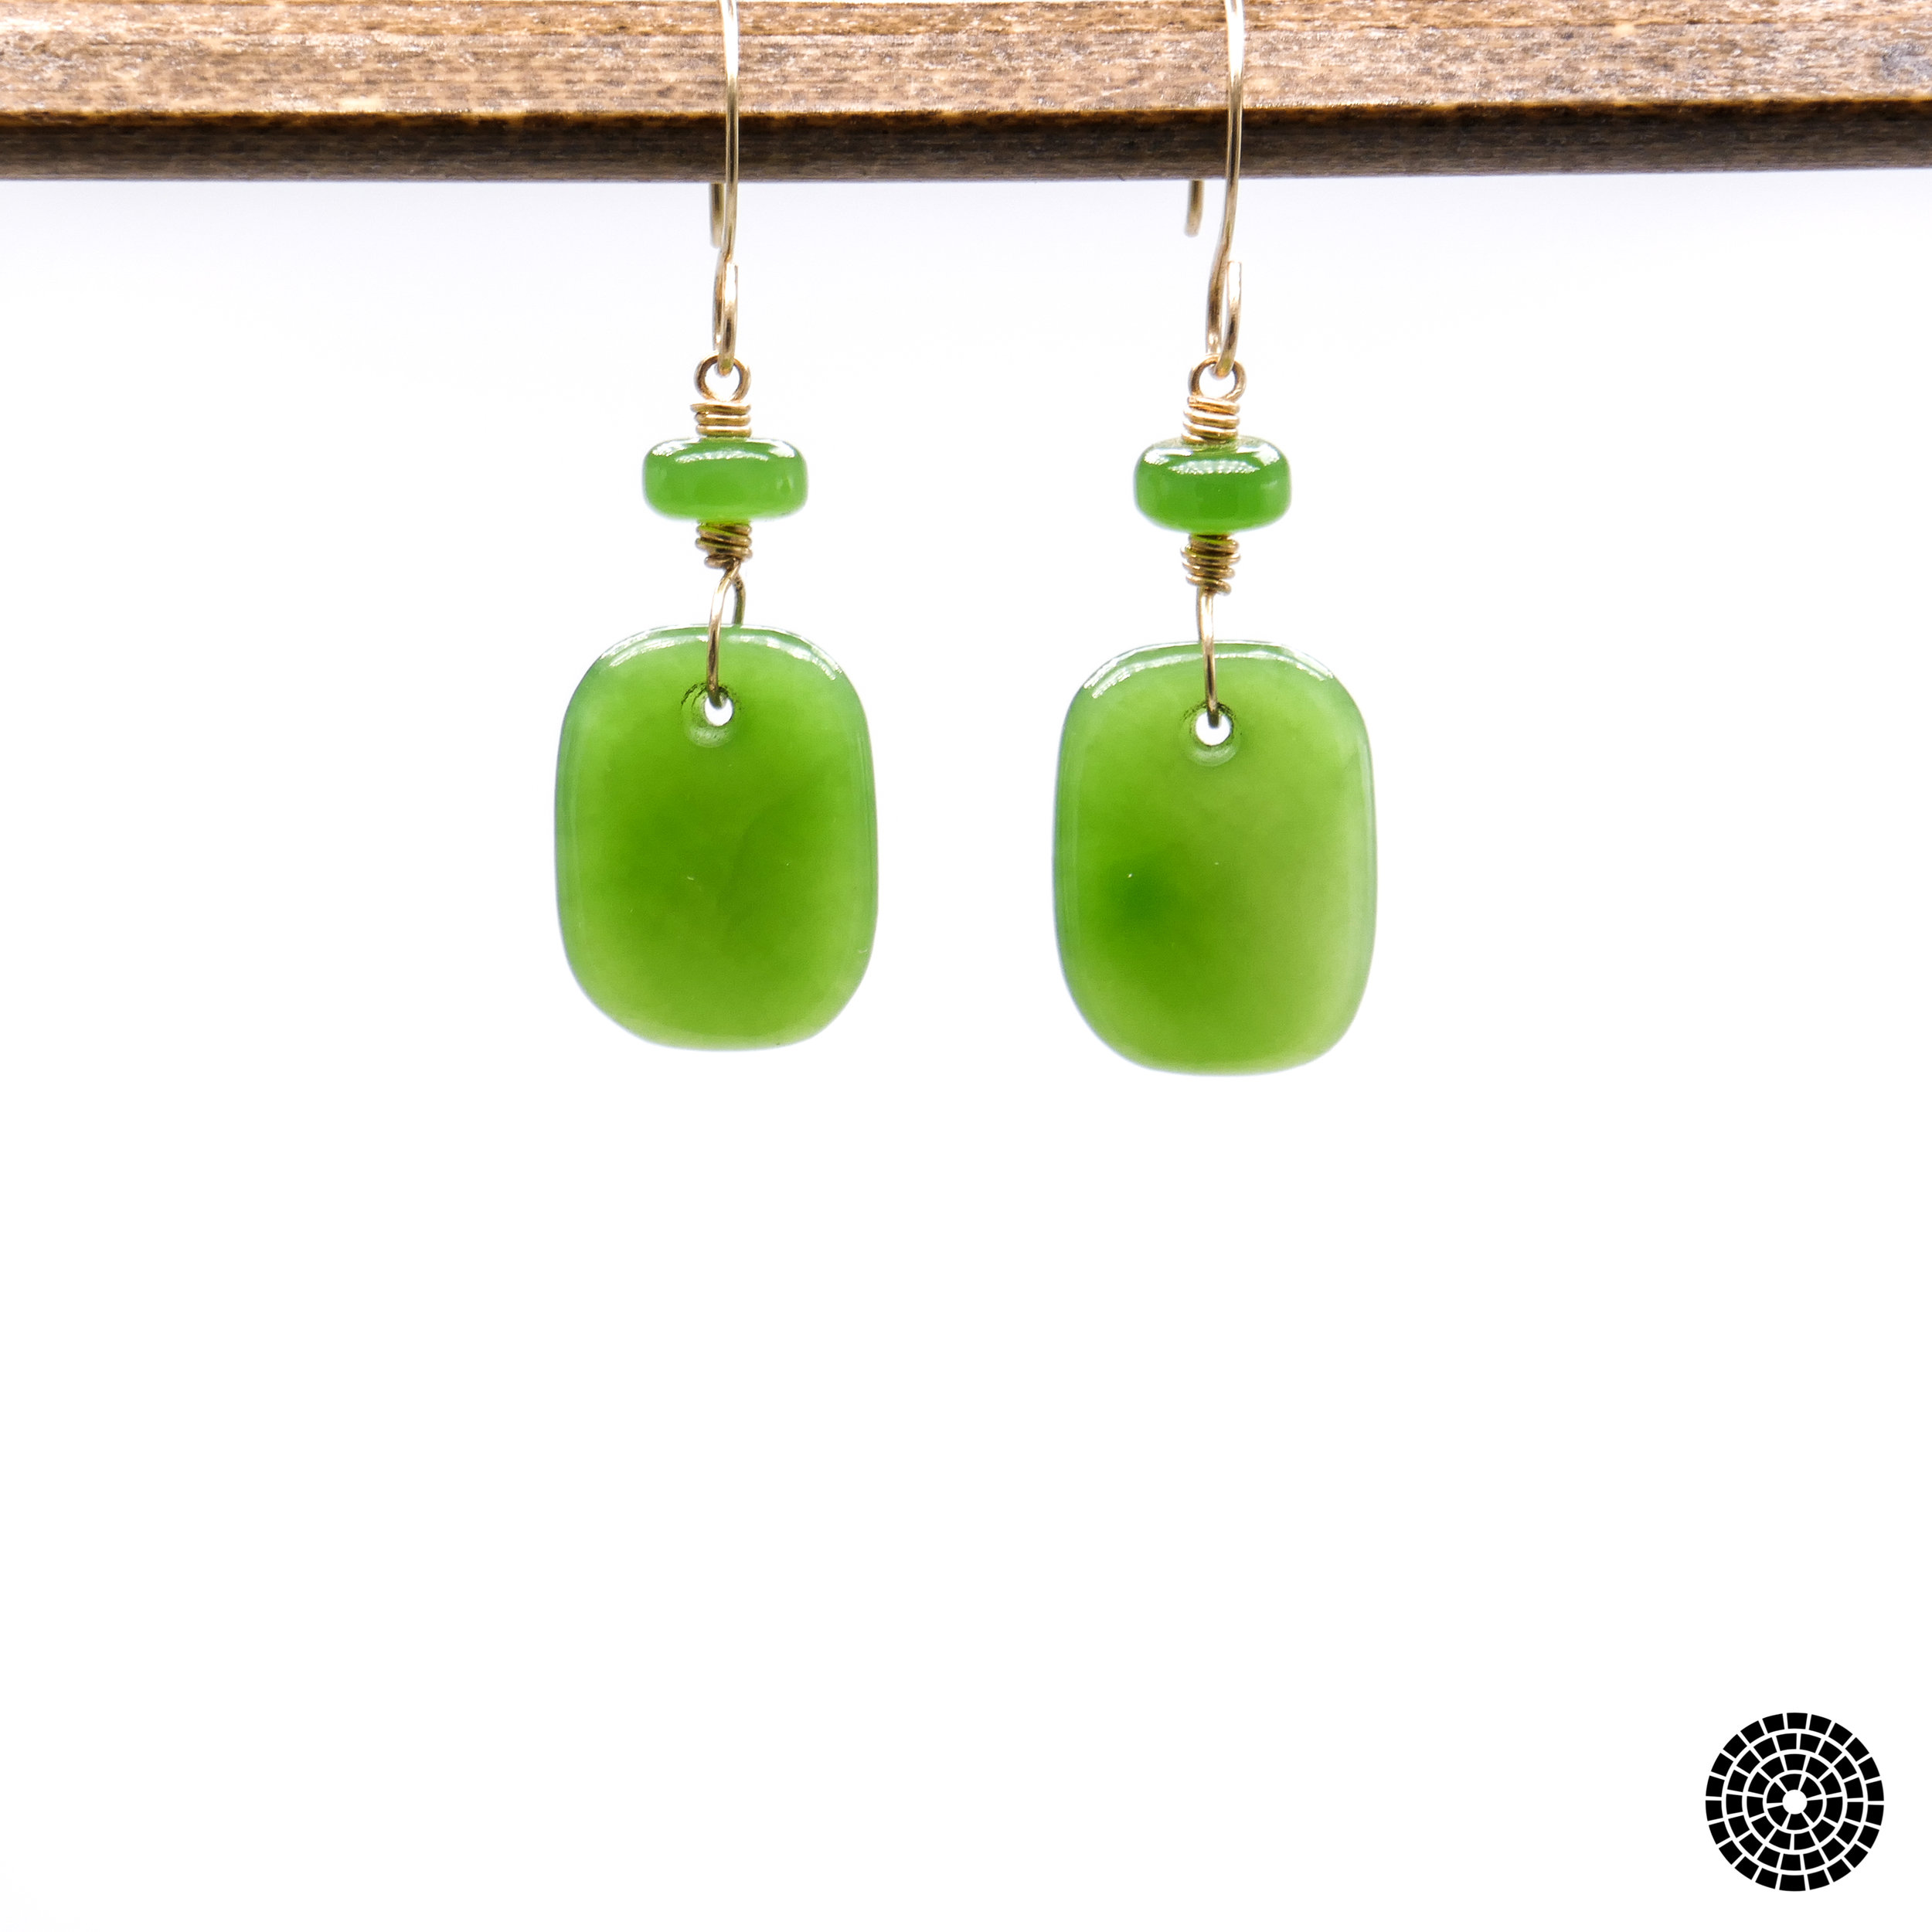 The KARA dangle earrings in color Soft Jade